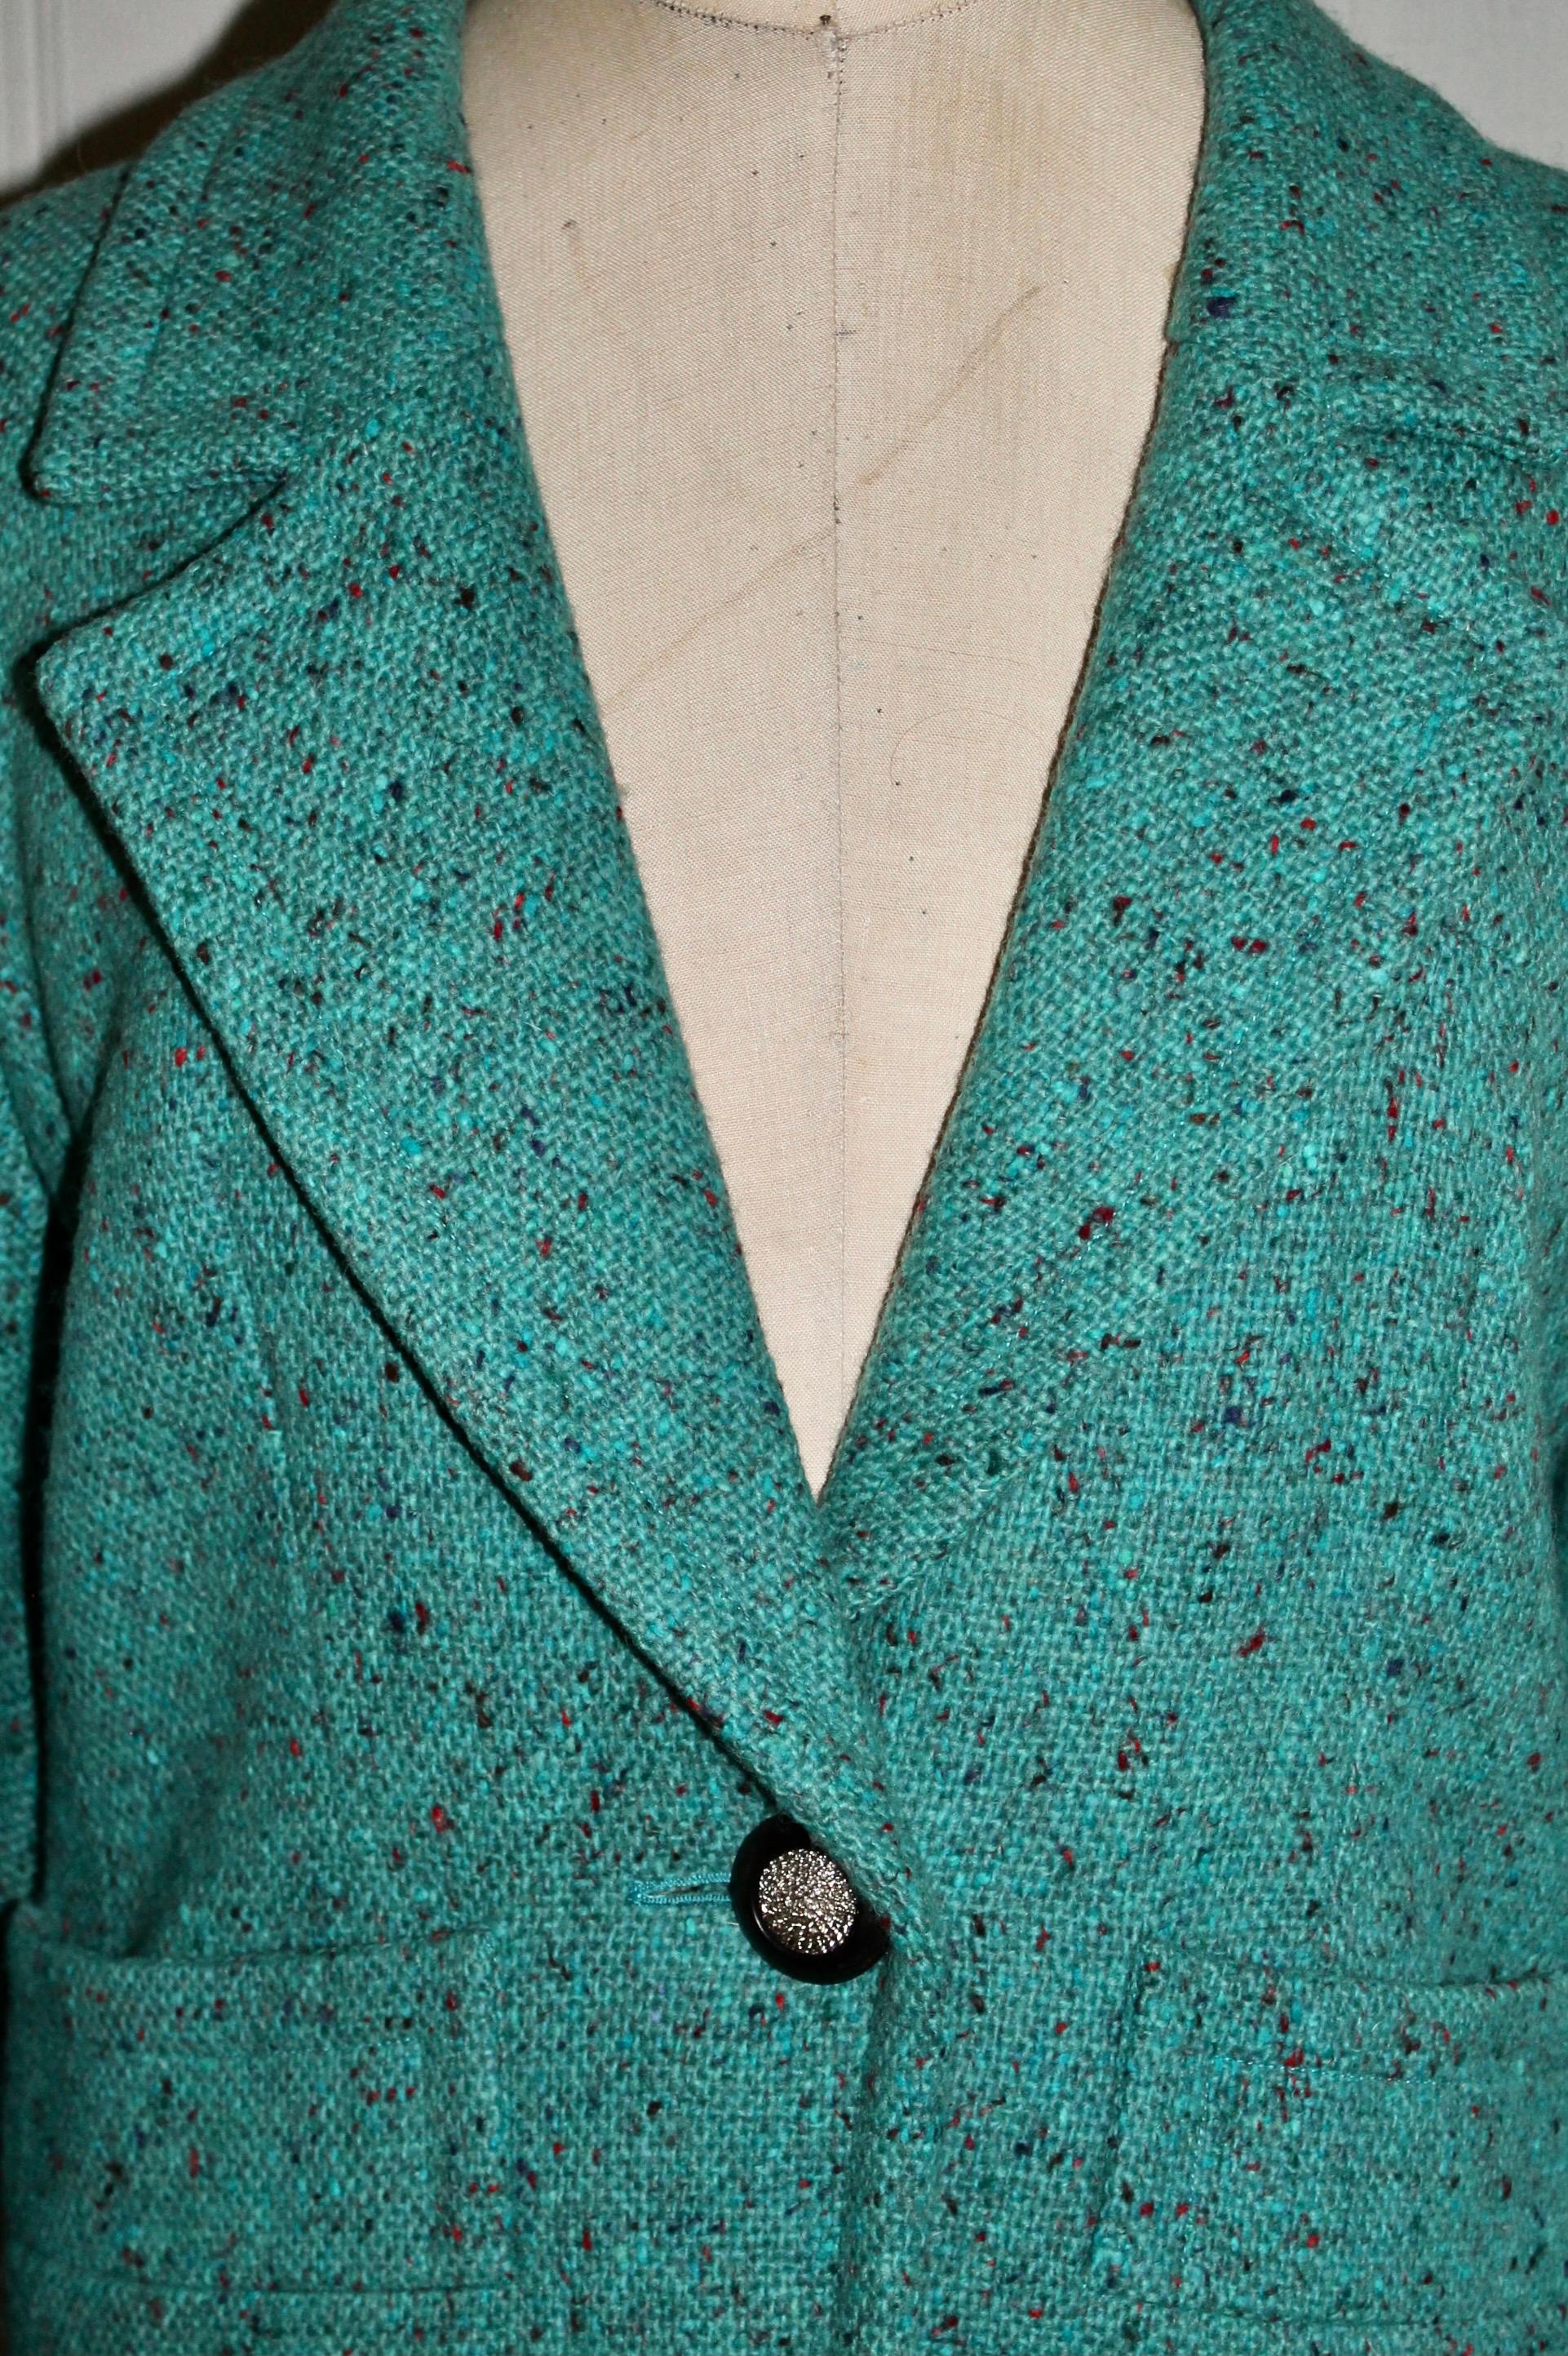 Yves Saint Laurent Rive Gauche Bergdorf labeled Suit For Sale 2